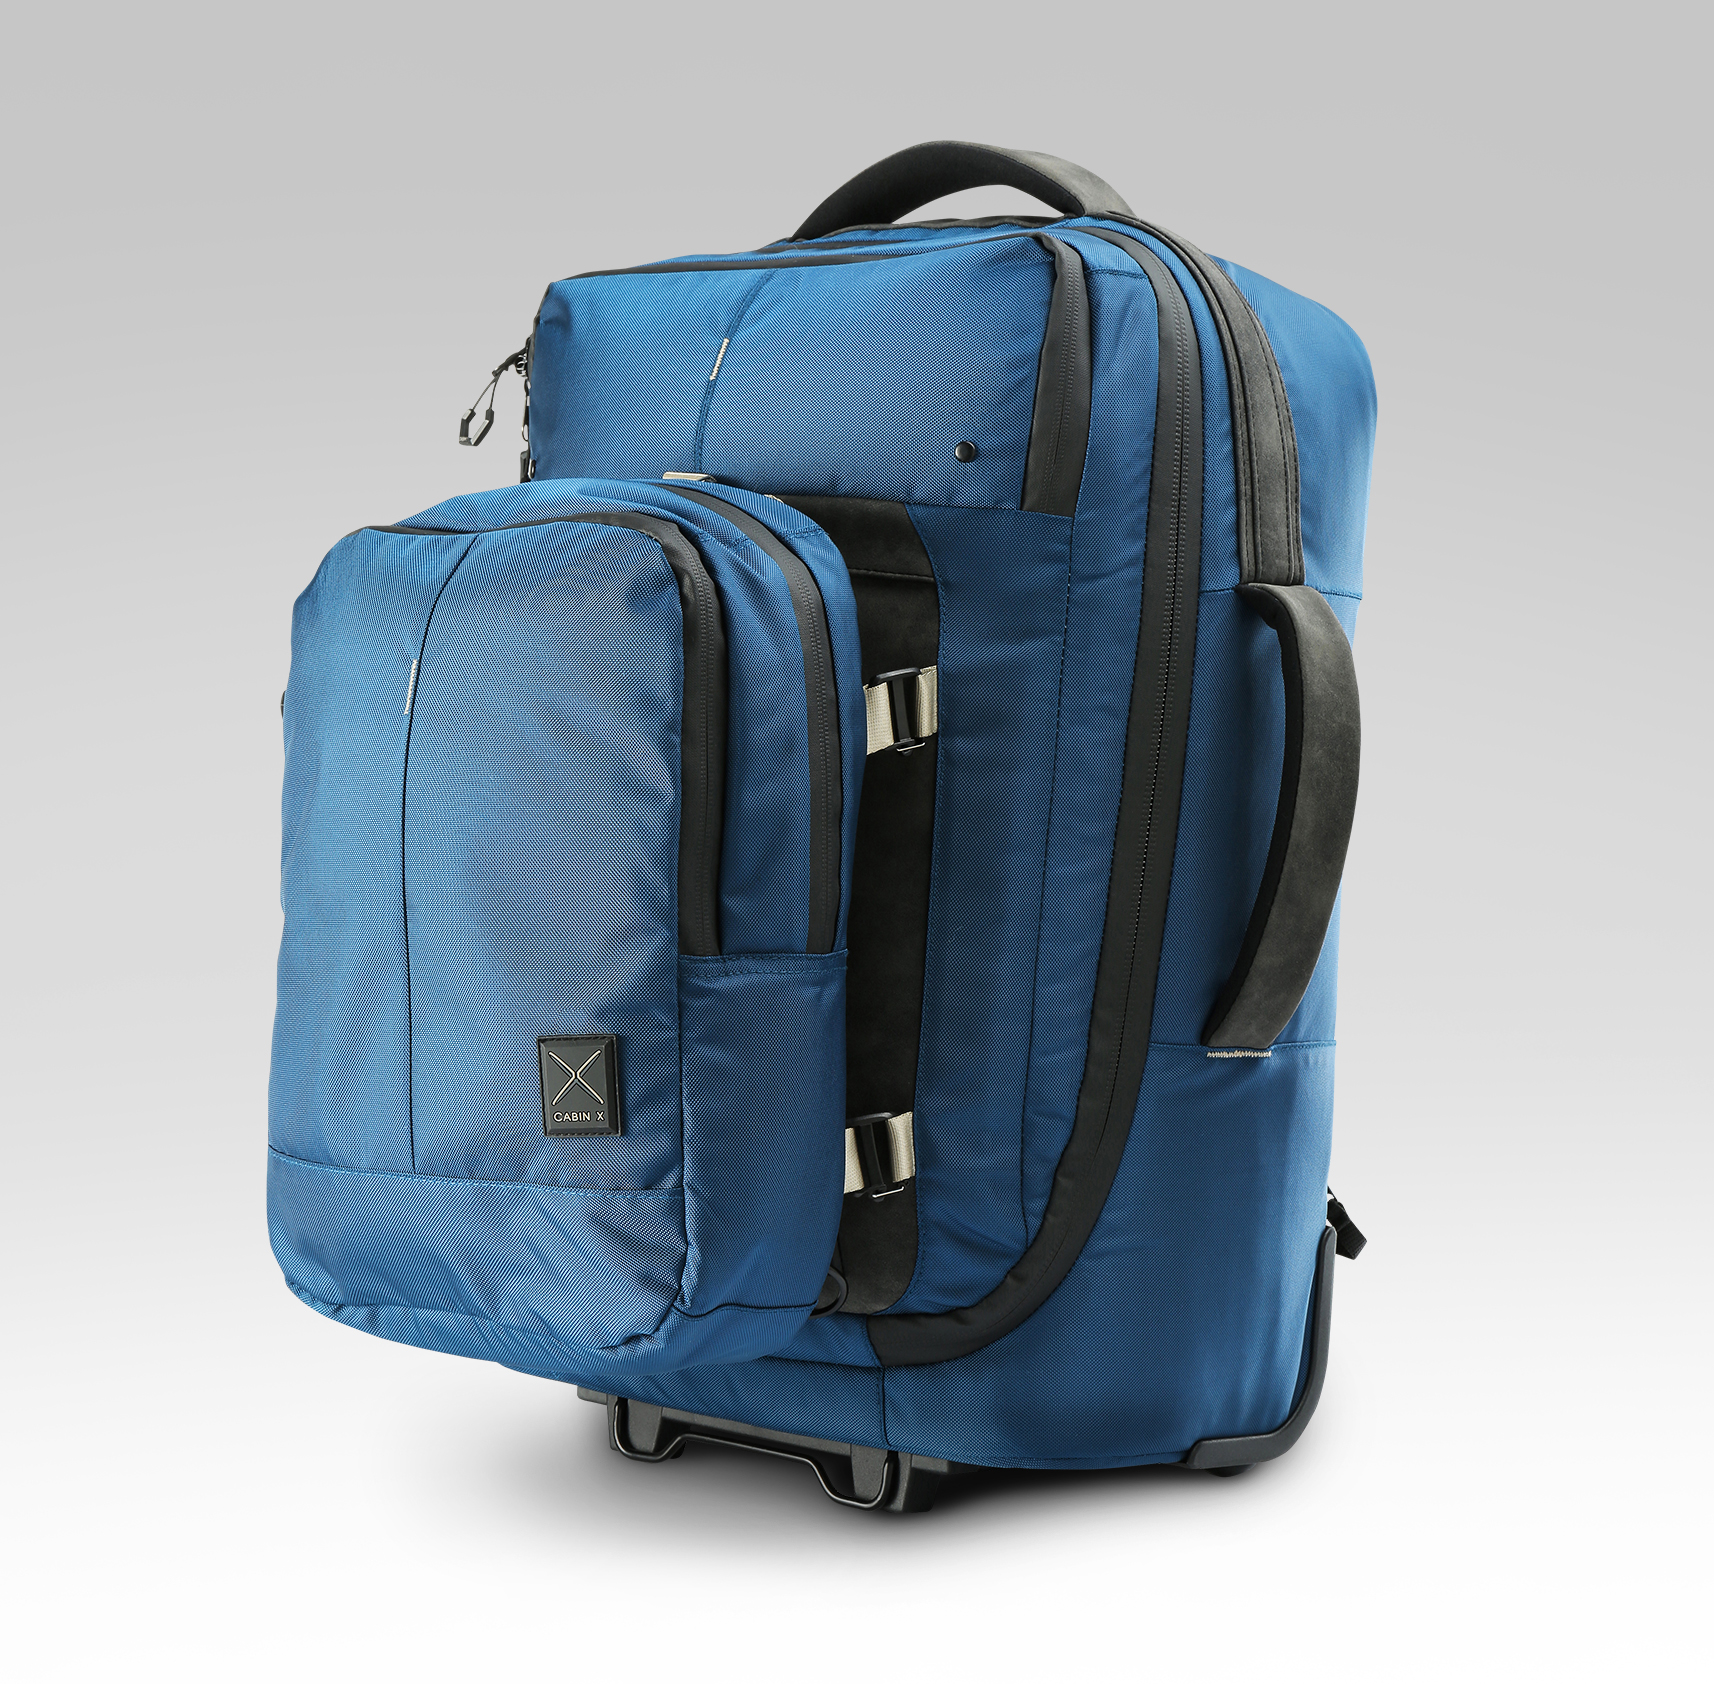 Cabin X One Hybrid and Companion Bag